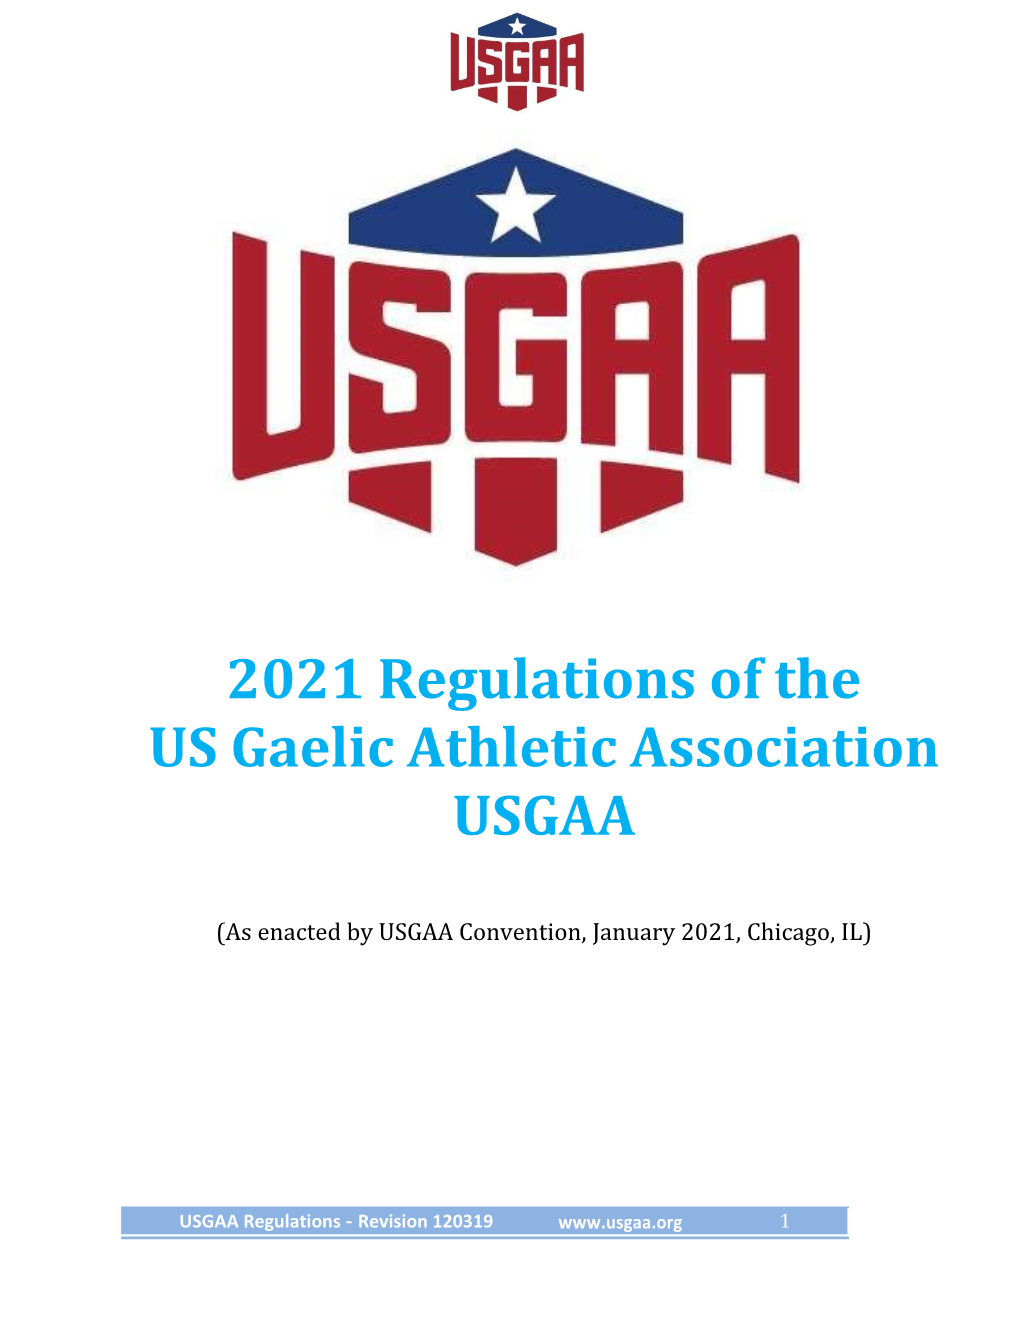 2021 Regulations of the US Gaelic Athletic Association USGAA